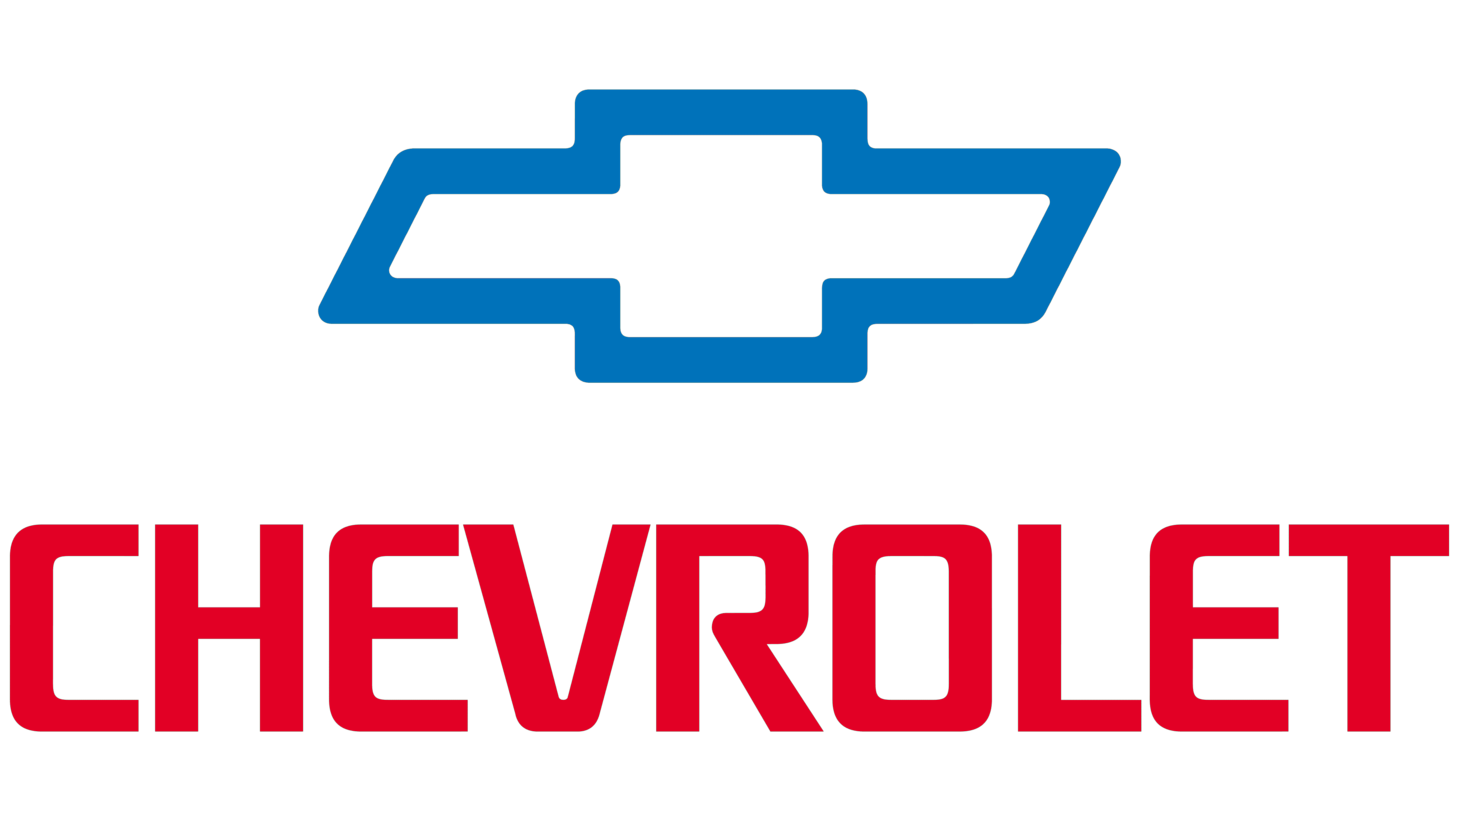 Chevrolet sign 1988 2002